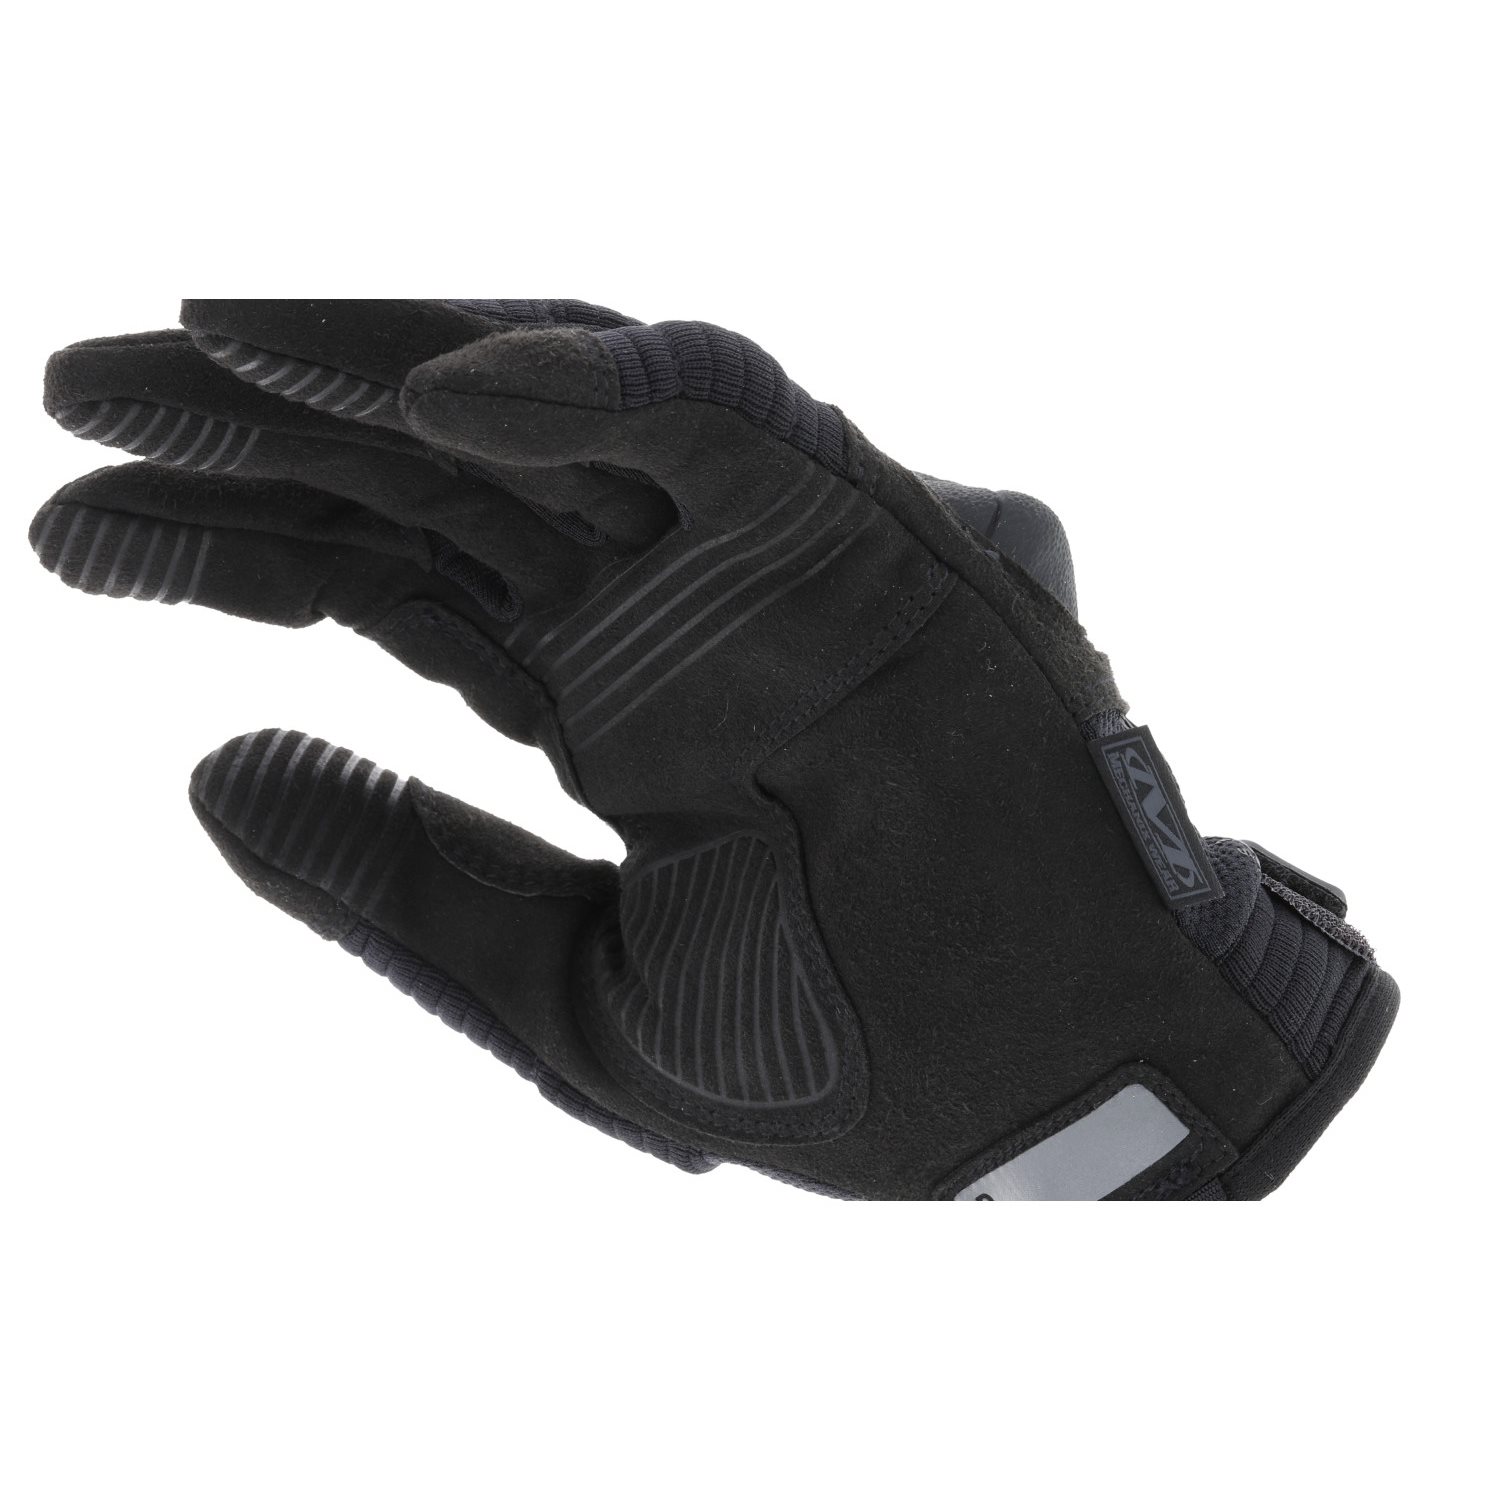 Mechanix Wear Black Mechanix M Pact 3 Tactical Gloves Armyshop Military Range